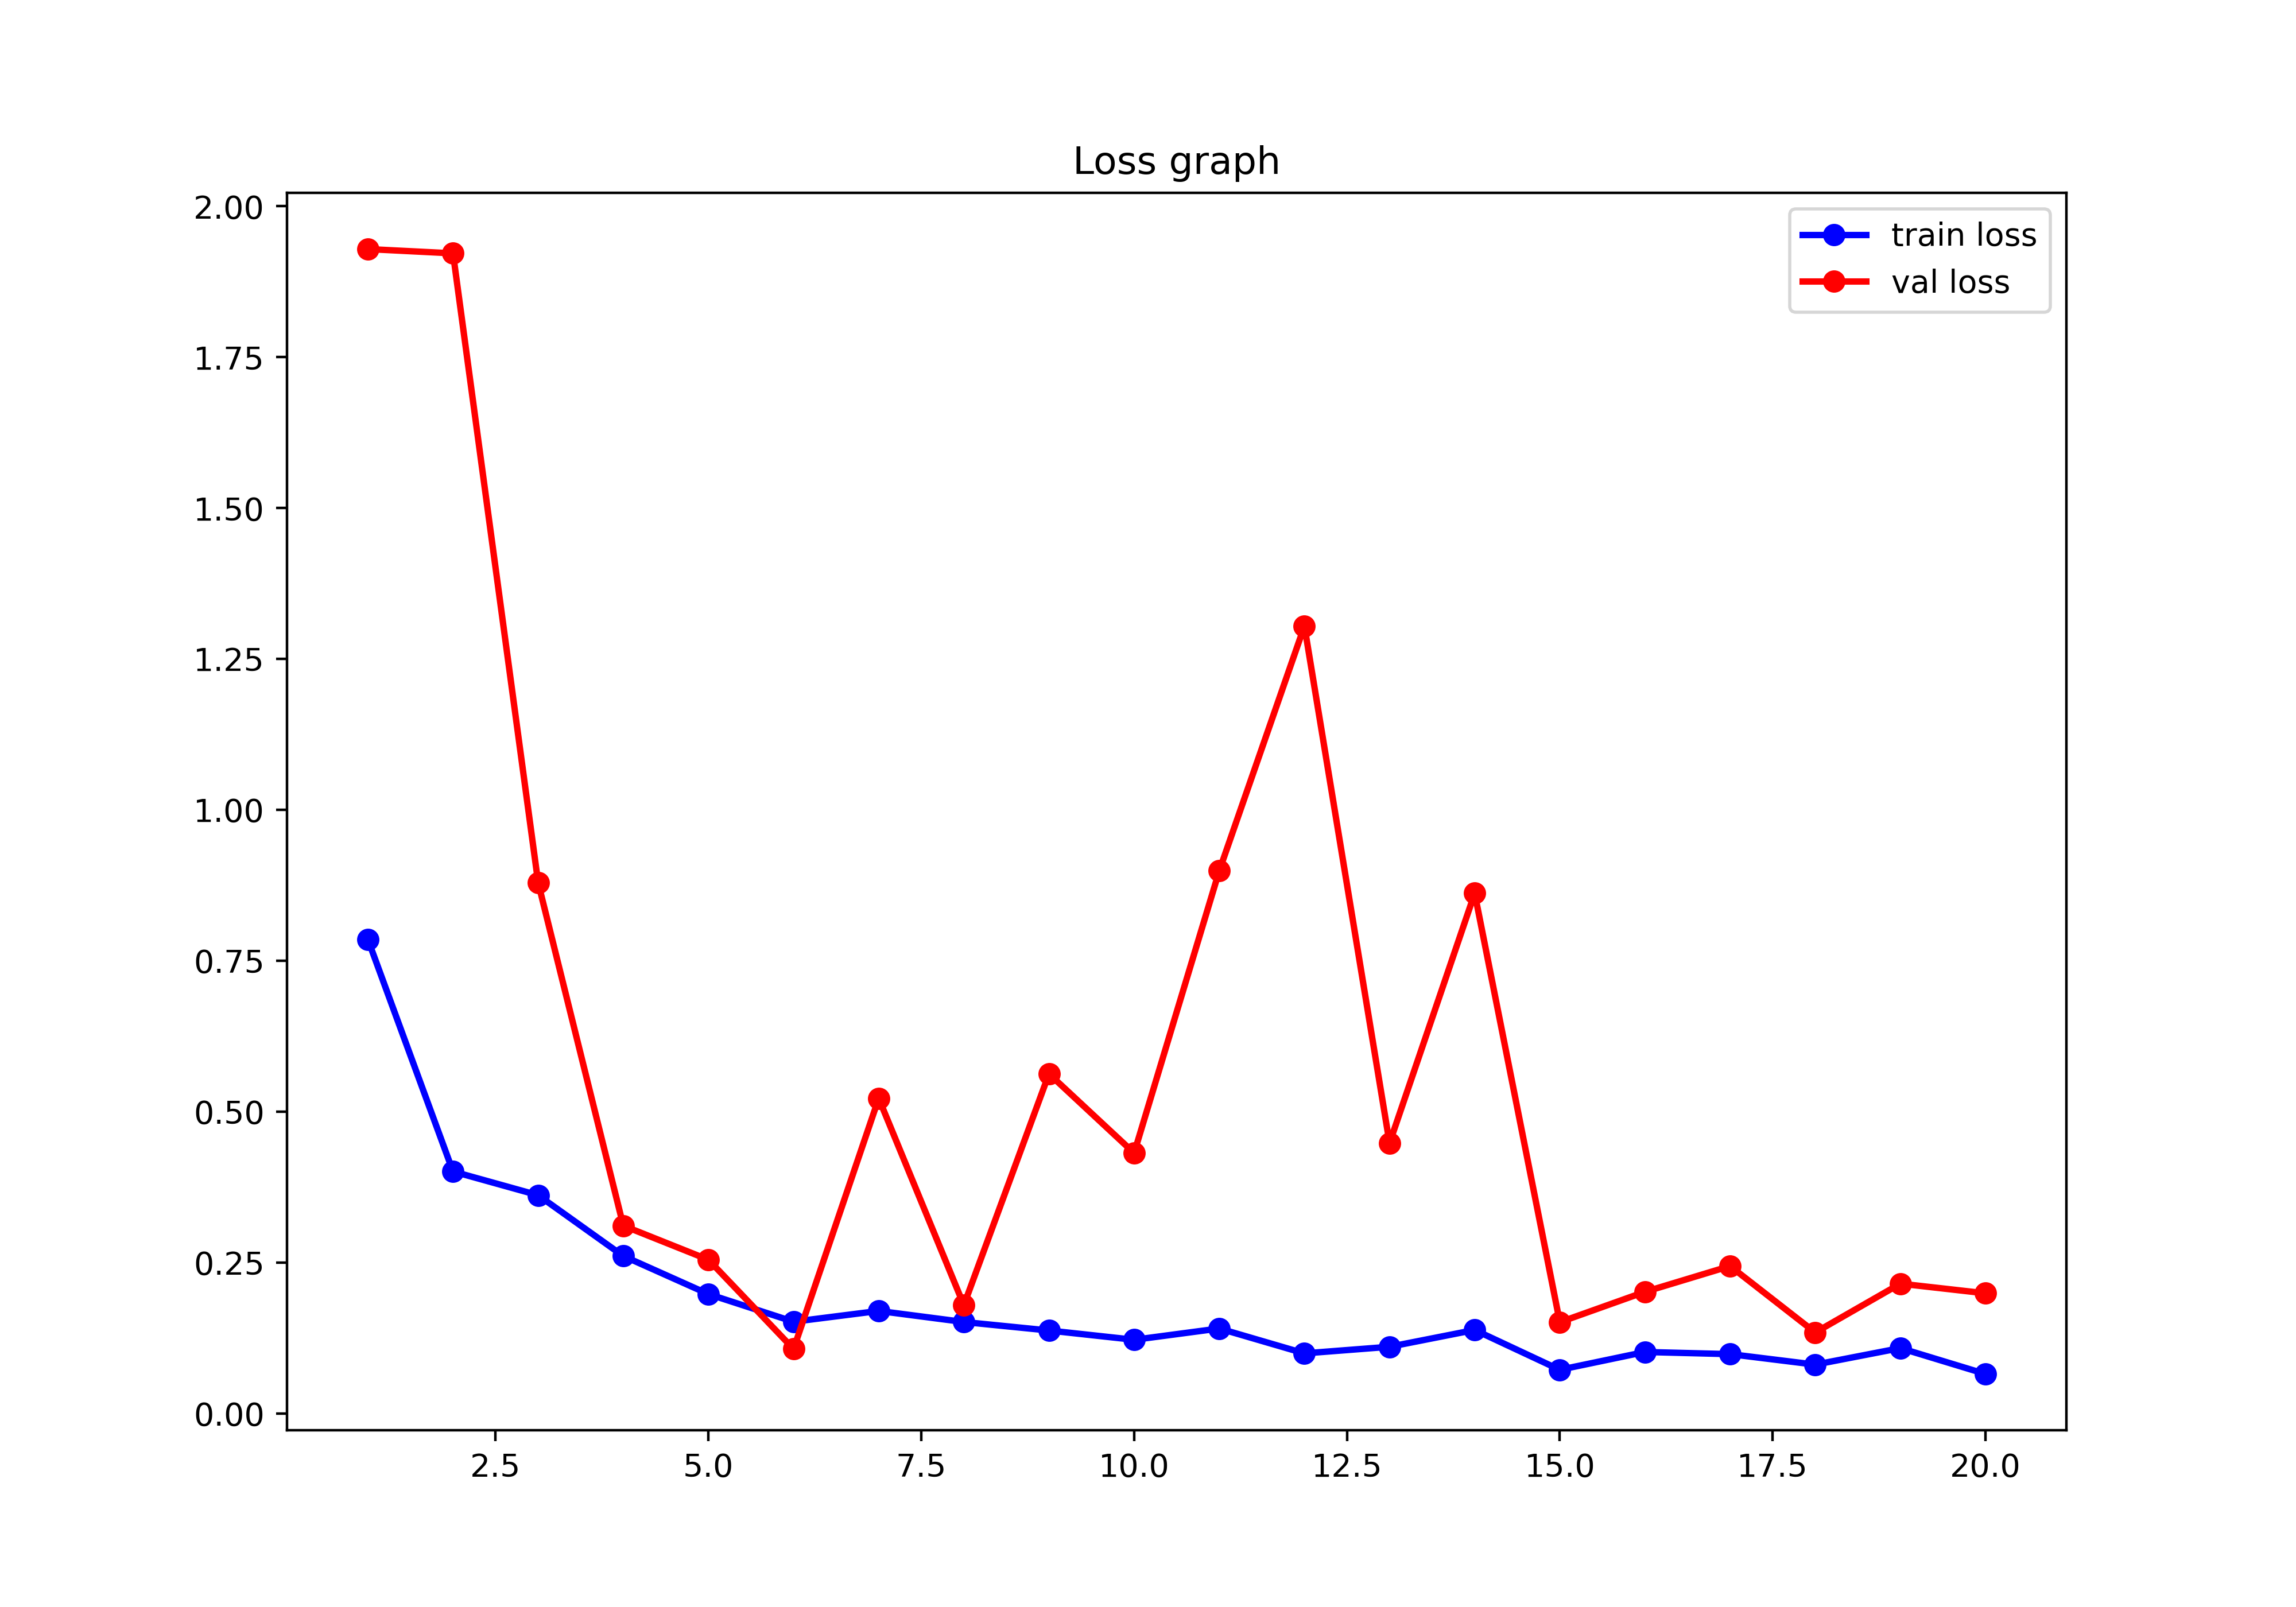 EfficientNet loss graph